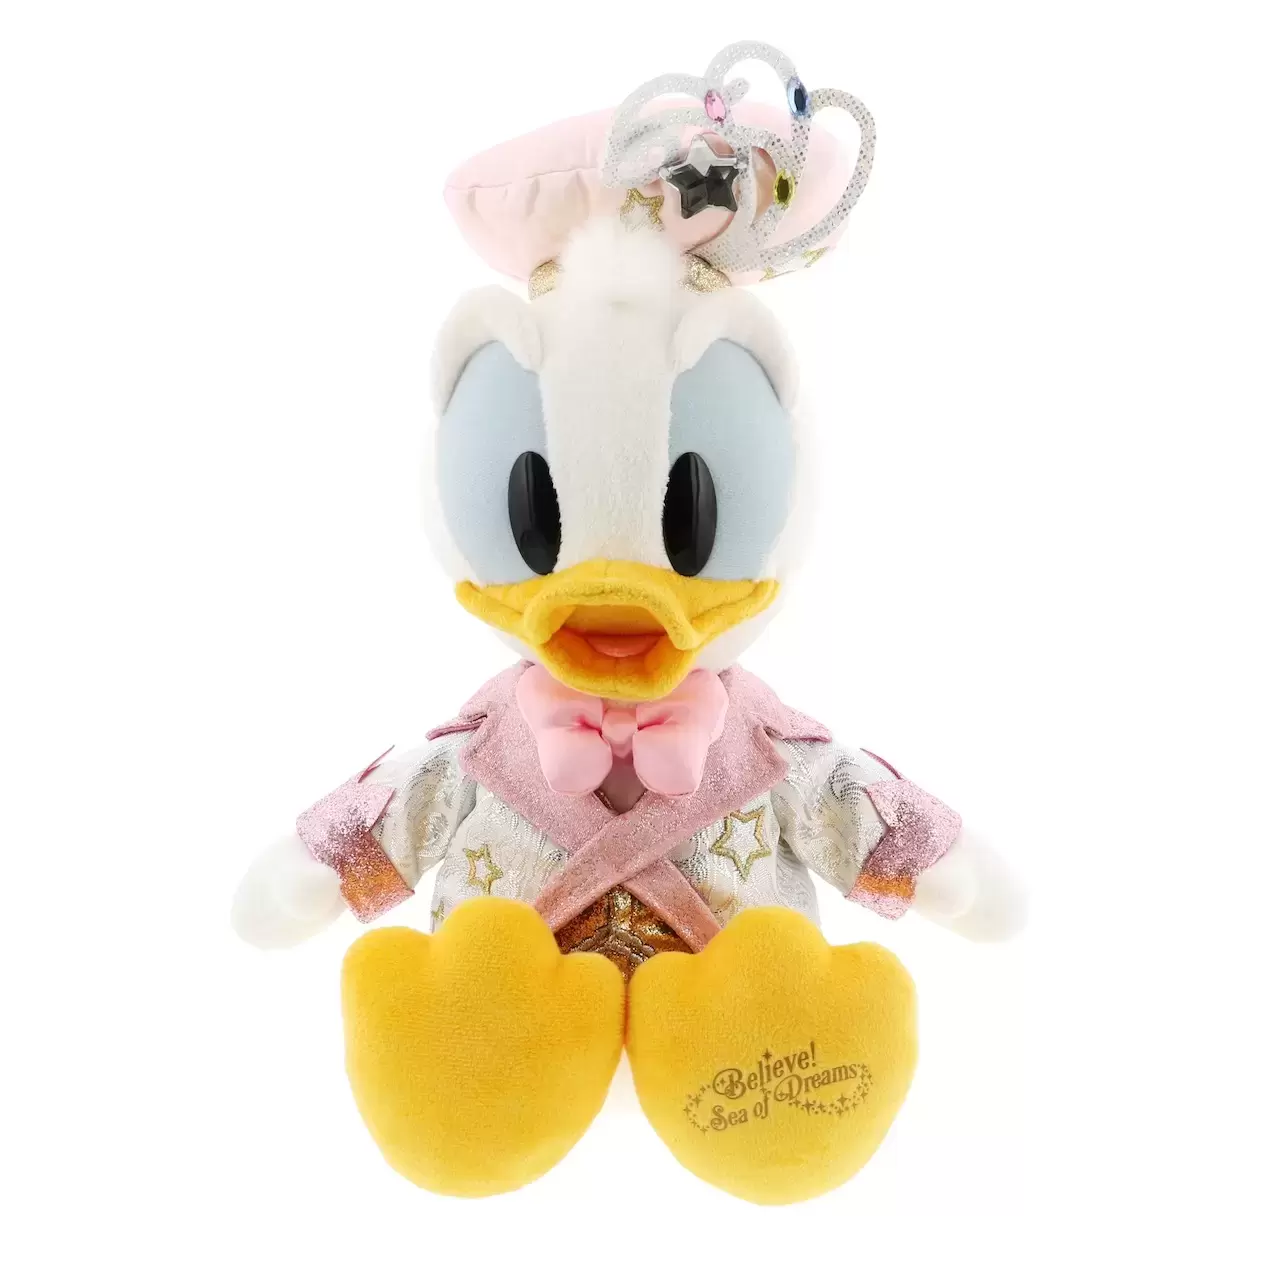 Walt Disney Plush - Mickey And Friends - Donald [Tokyo Disneysea. Believe! sea of dreams]